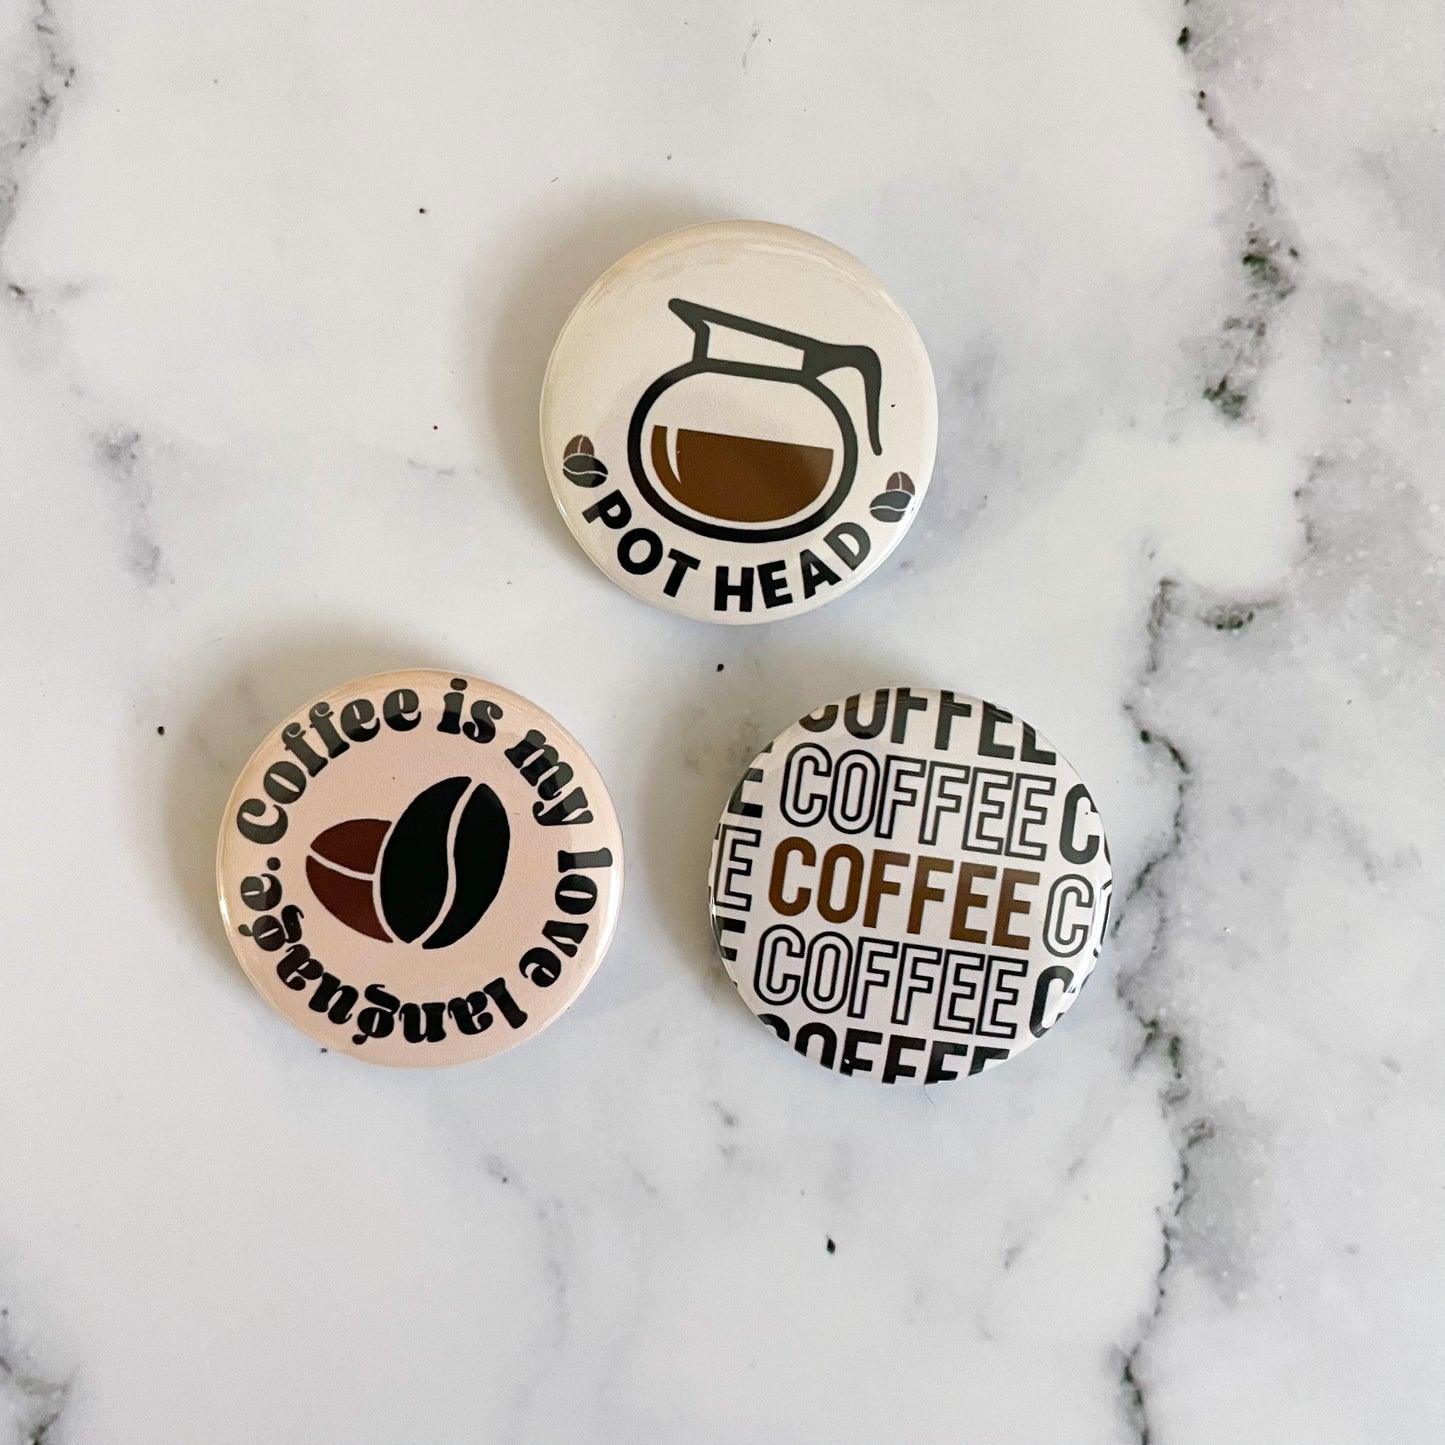 Pot Head Coffee Button / Badge (Buy 4 Get 1 FREE)